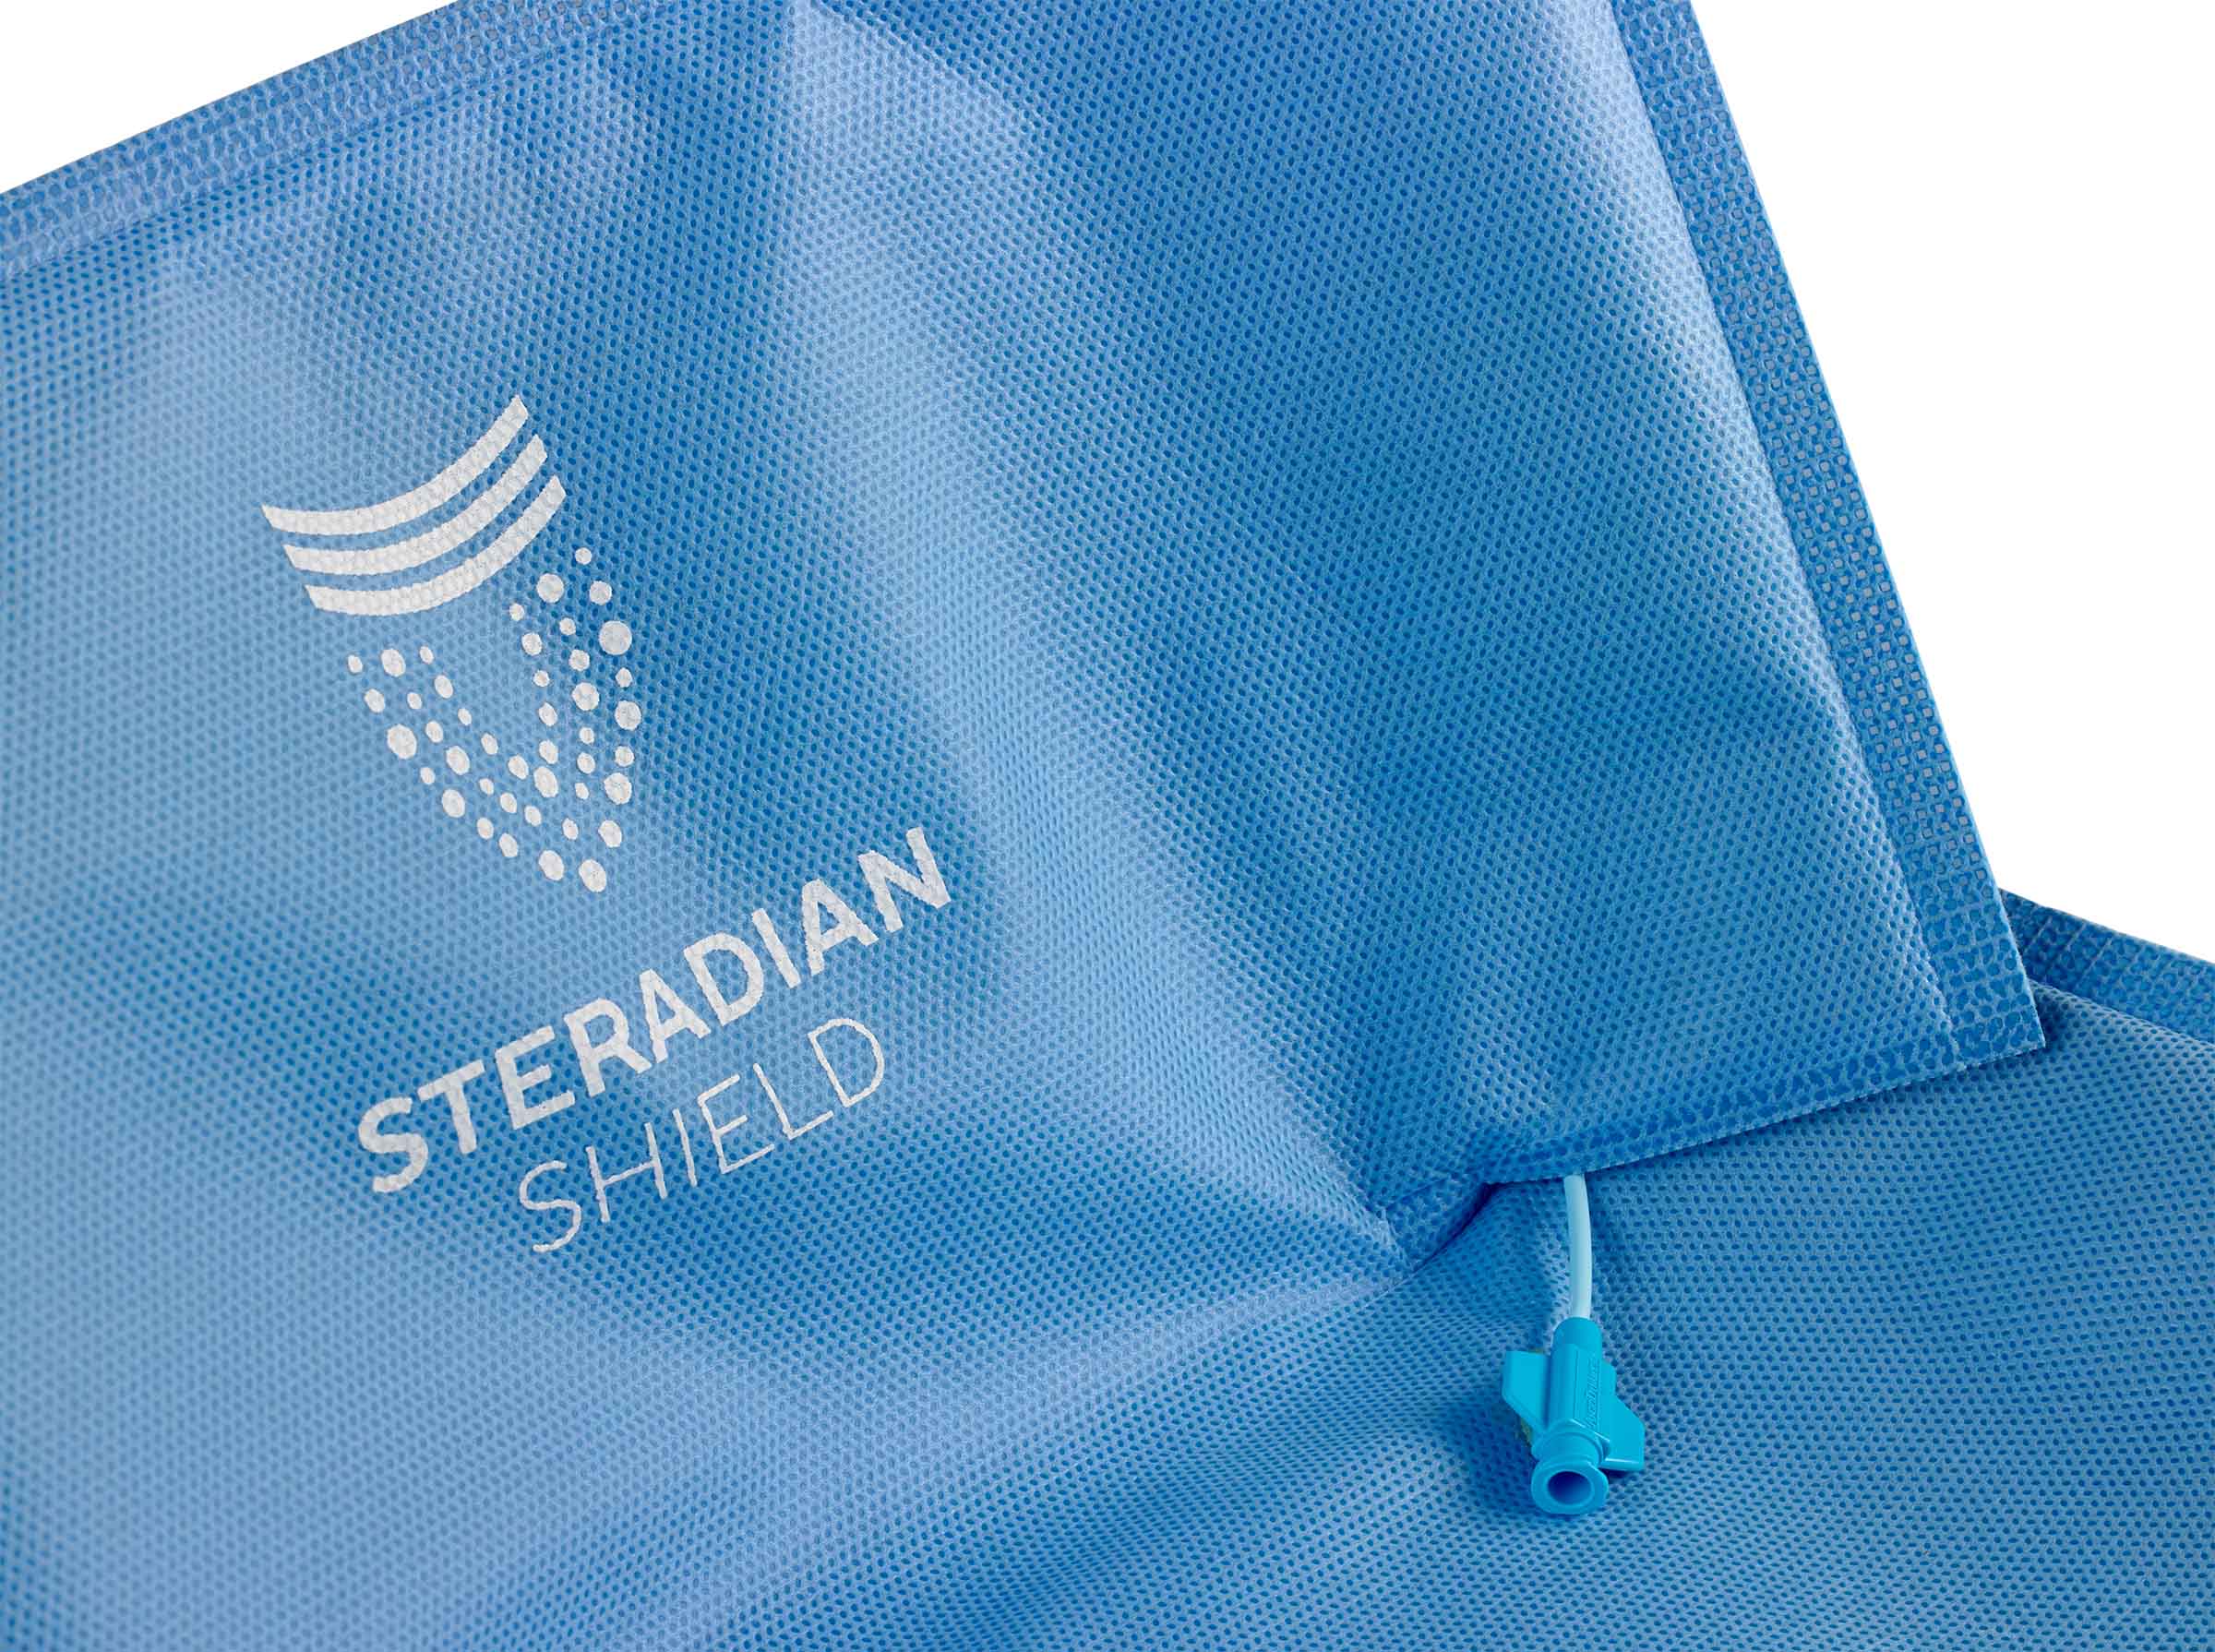 Steradian Shield